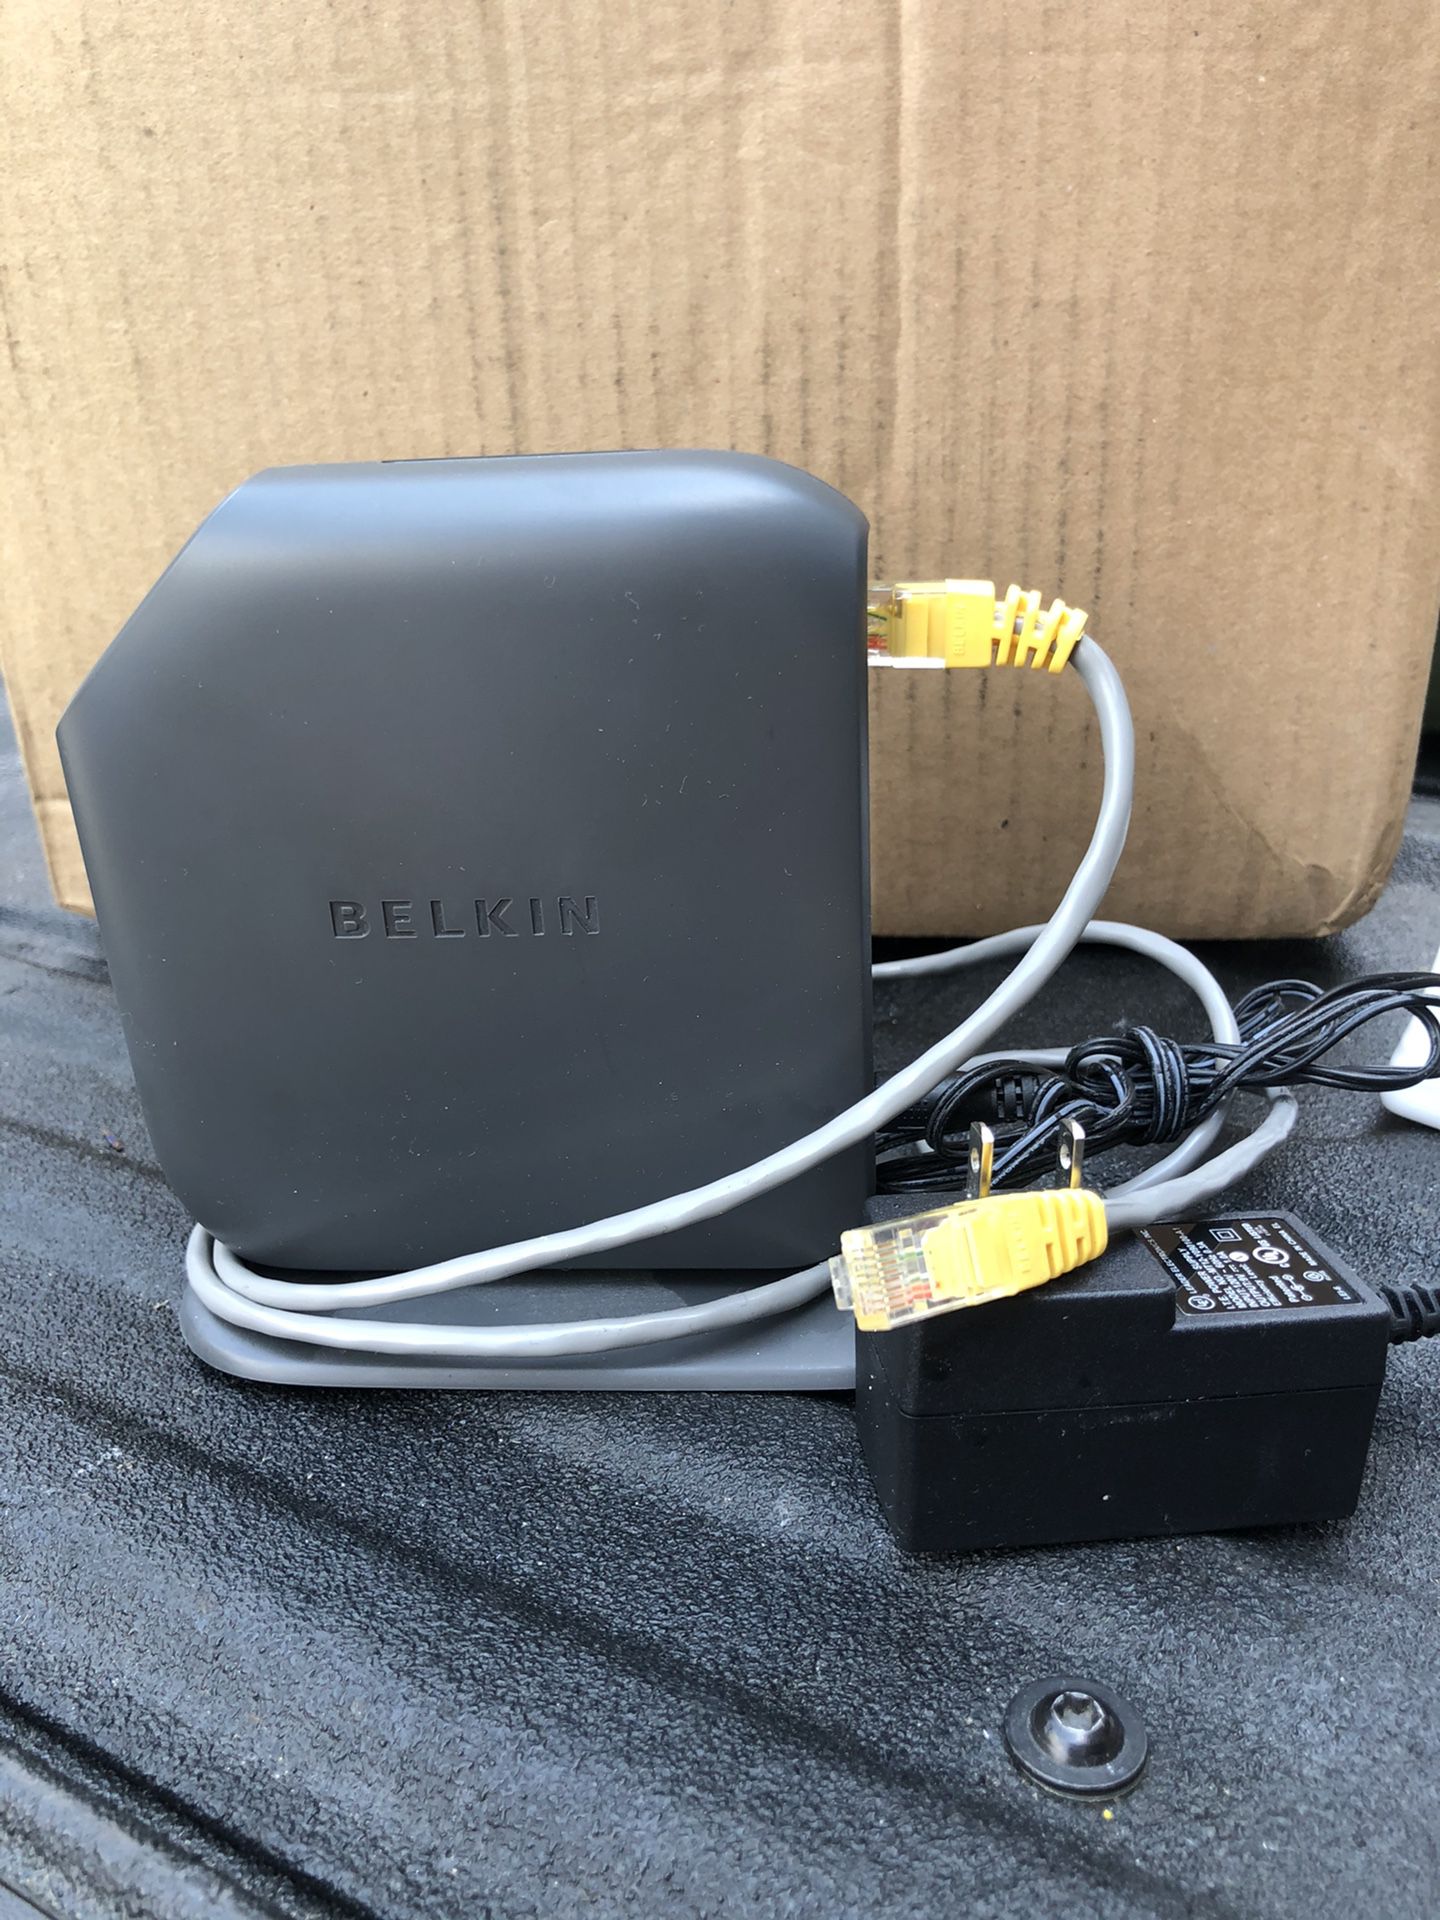 Belkin Wireless Router, model number F7D1301 v1